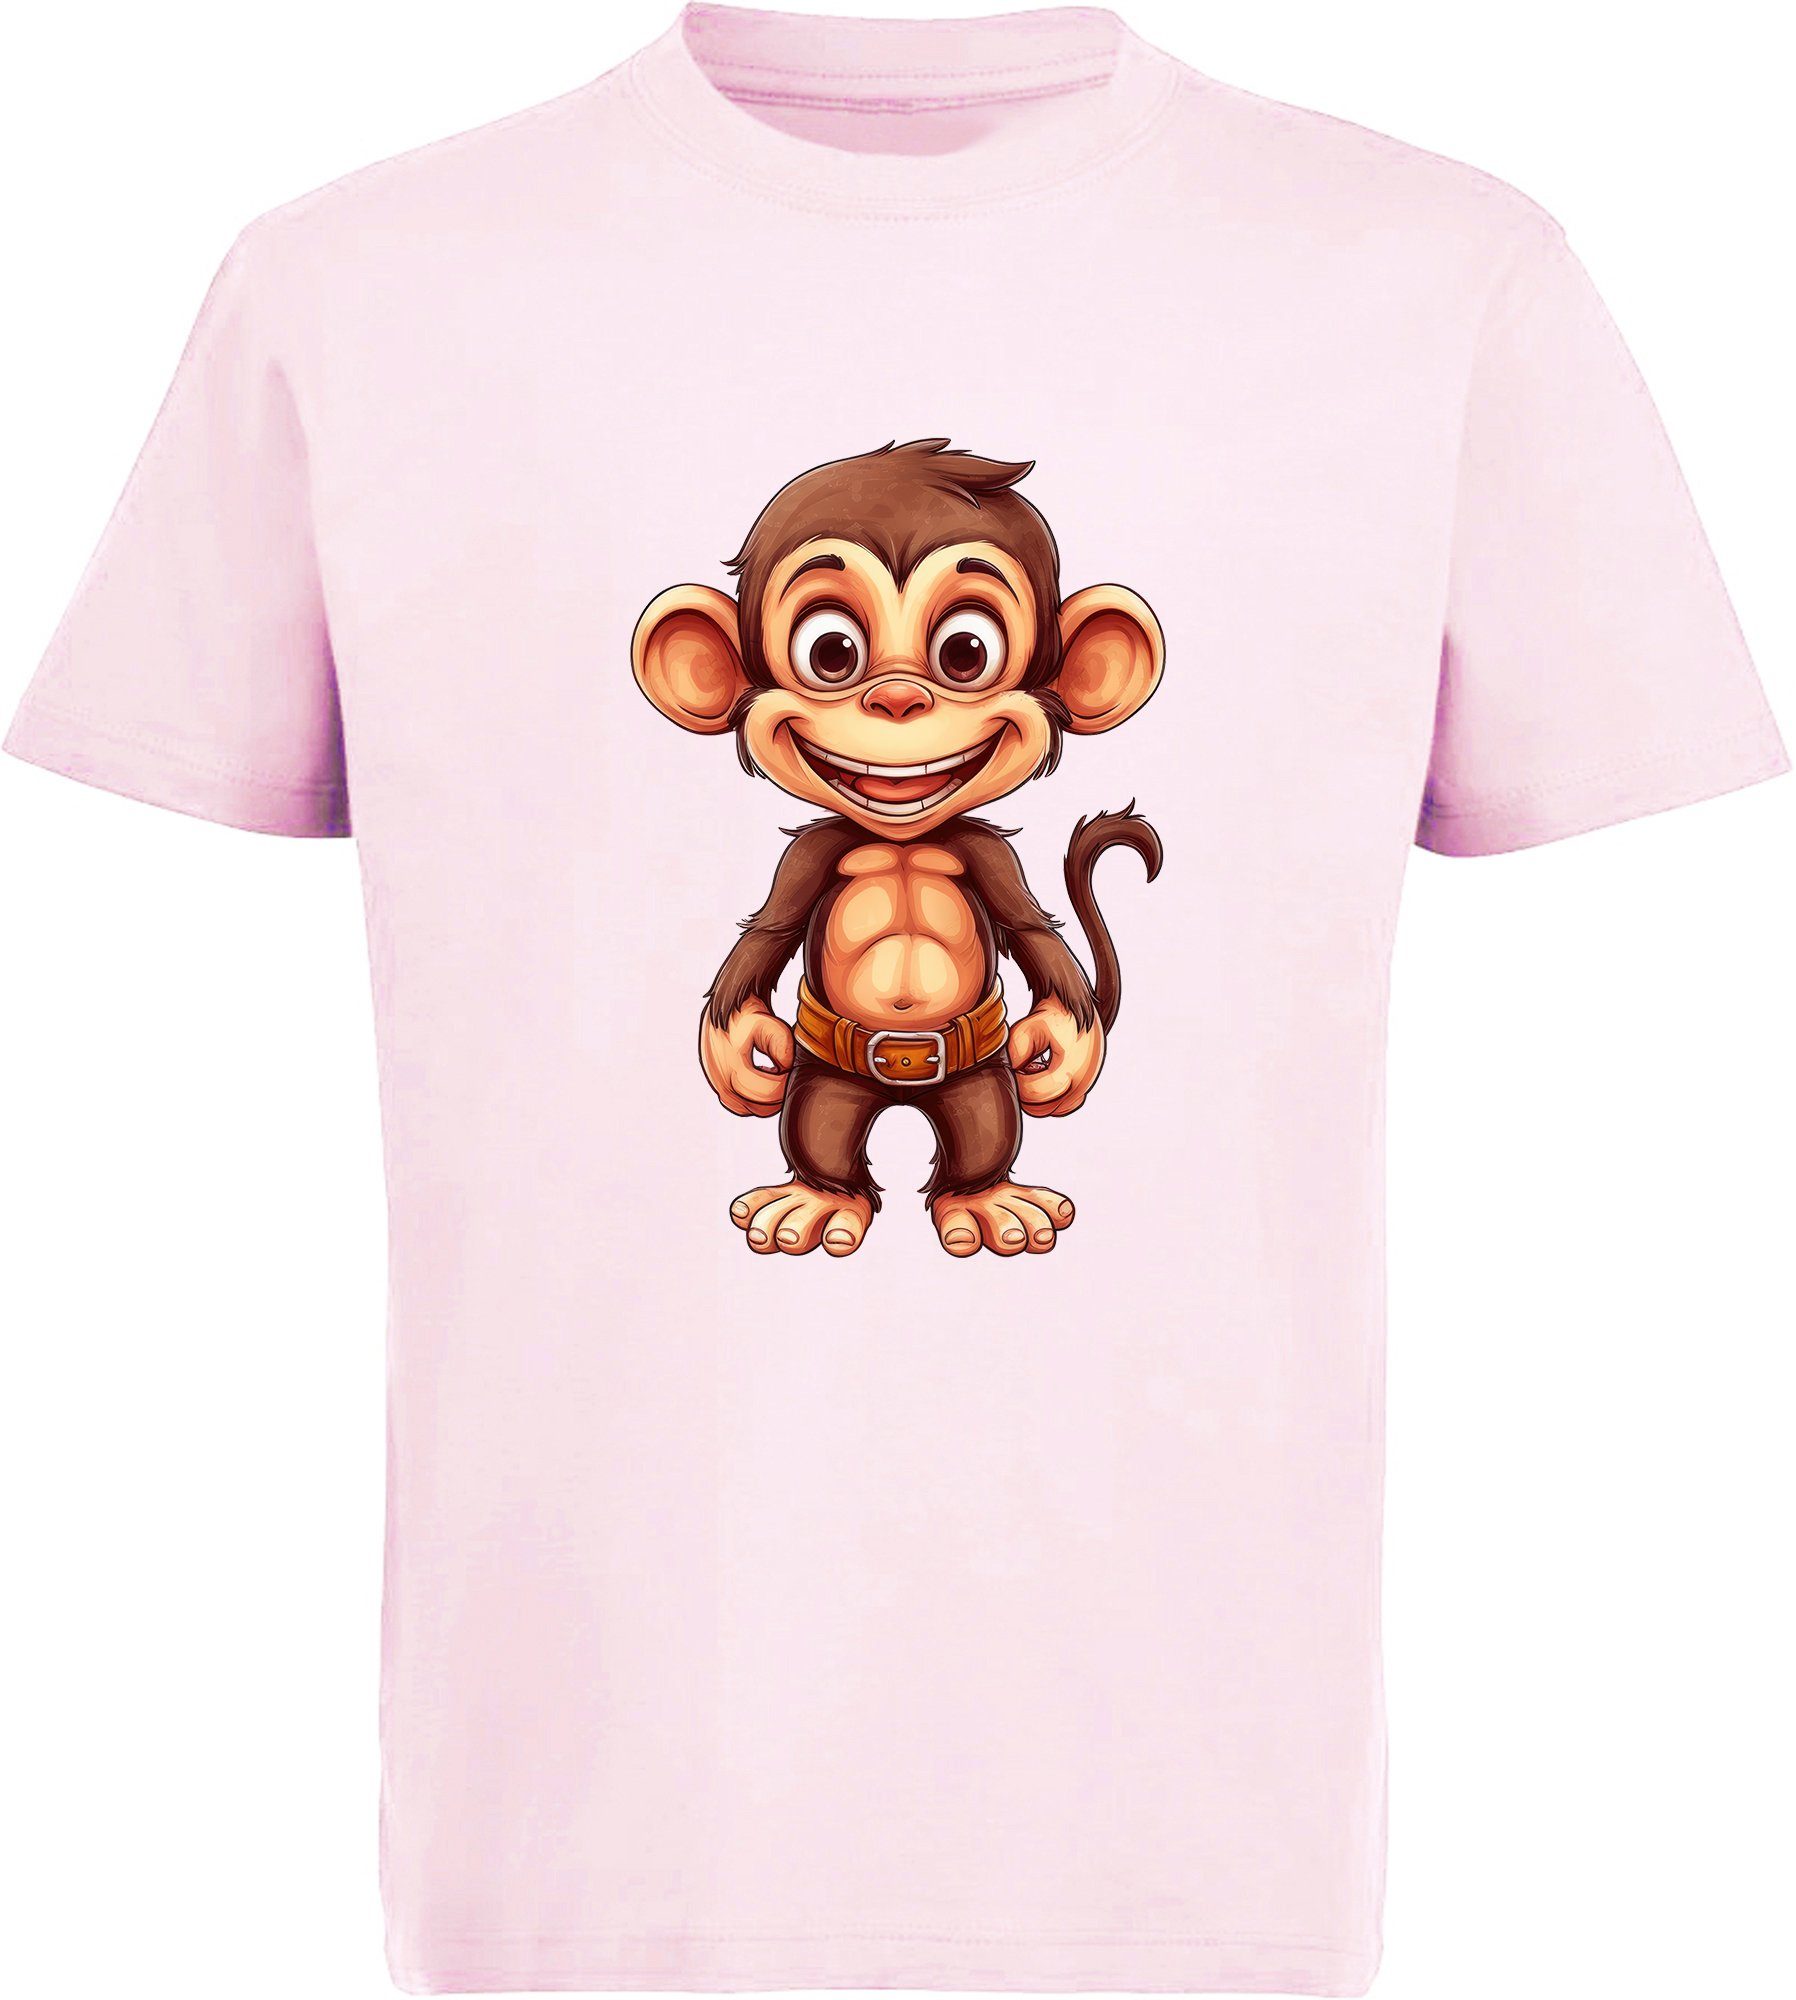 MyDesign24 T-Shirt Kinder Wildtier Print Shirt bedruckt - Baby Affe Schimpanse Baumwollshirt mit Aufdruck, i276 rosa